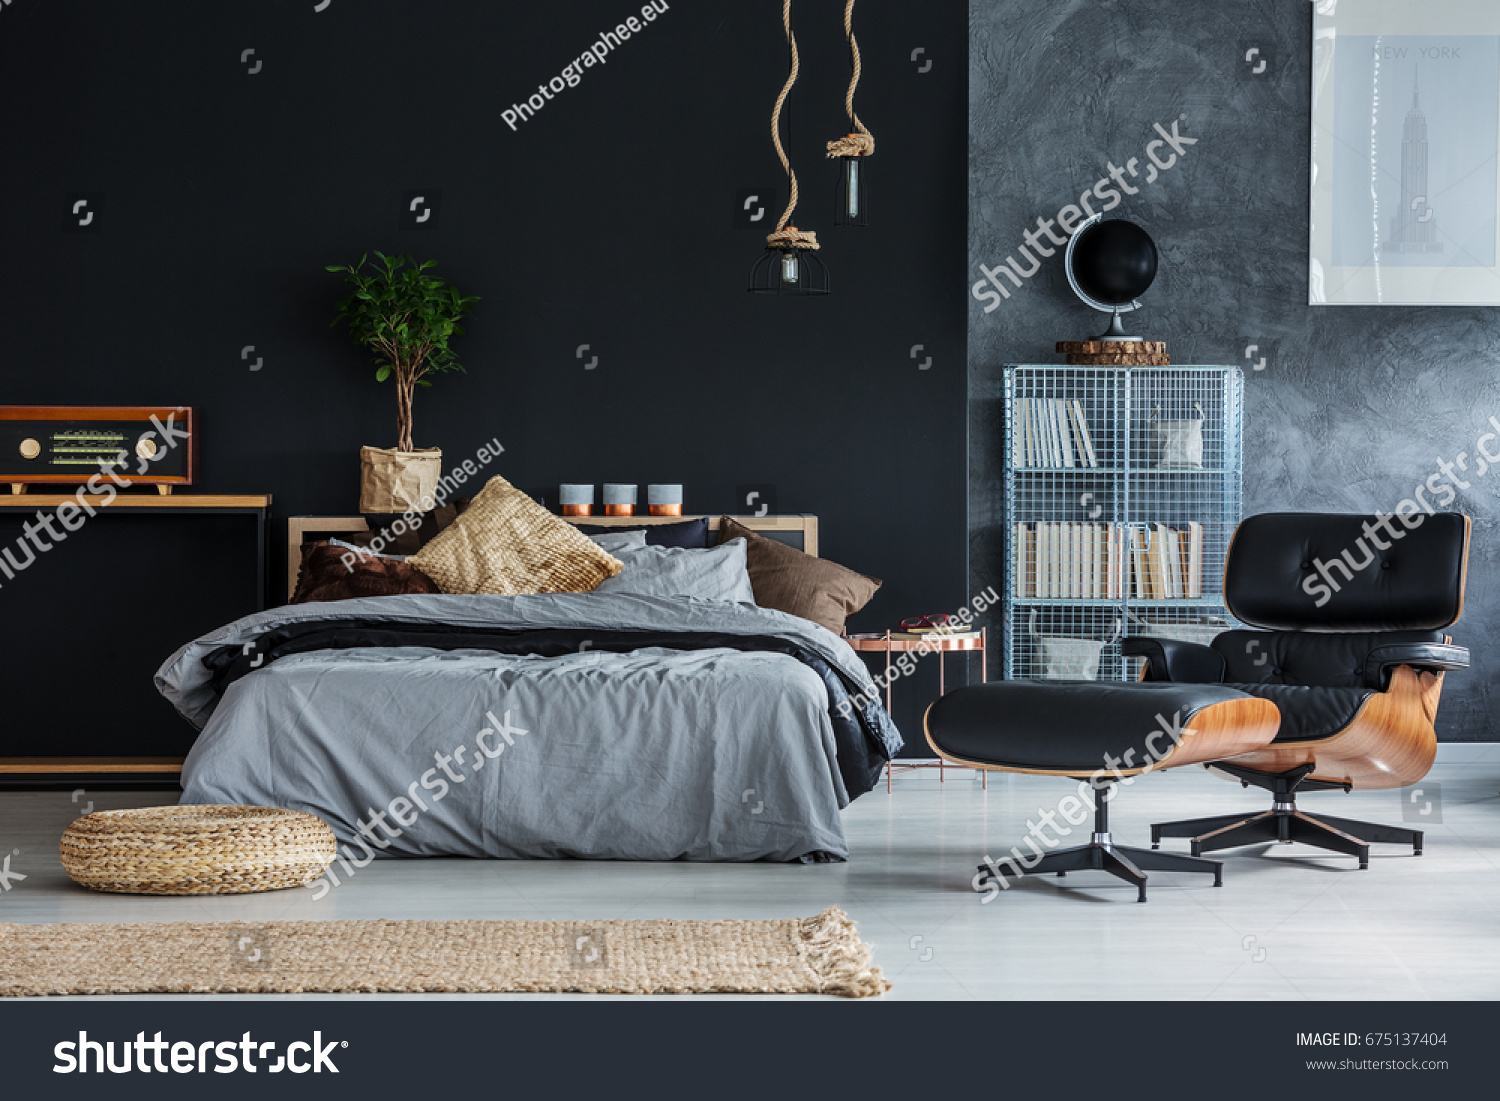 Wicker accessories in black and grey modern bedroom #675137404